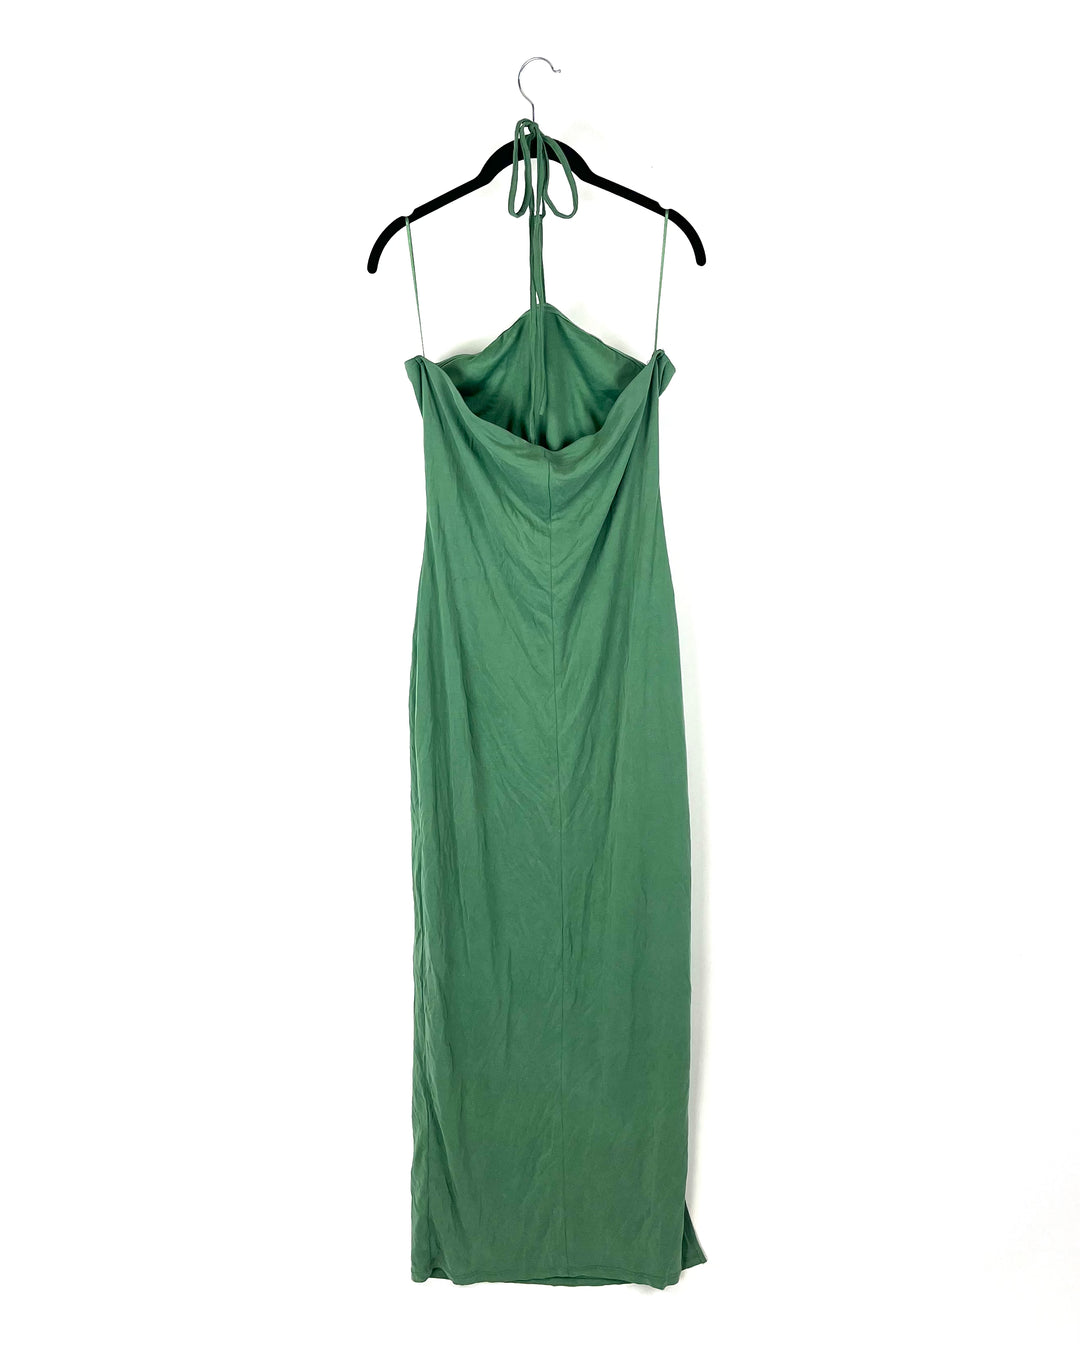 Green Maxi Halter Dress - 2X and 4X